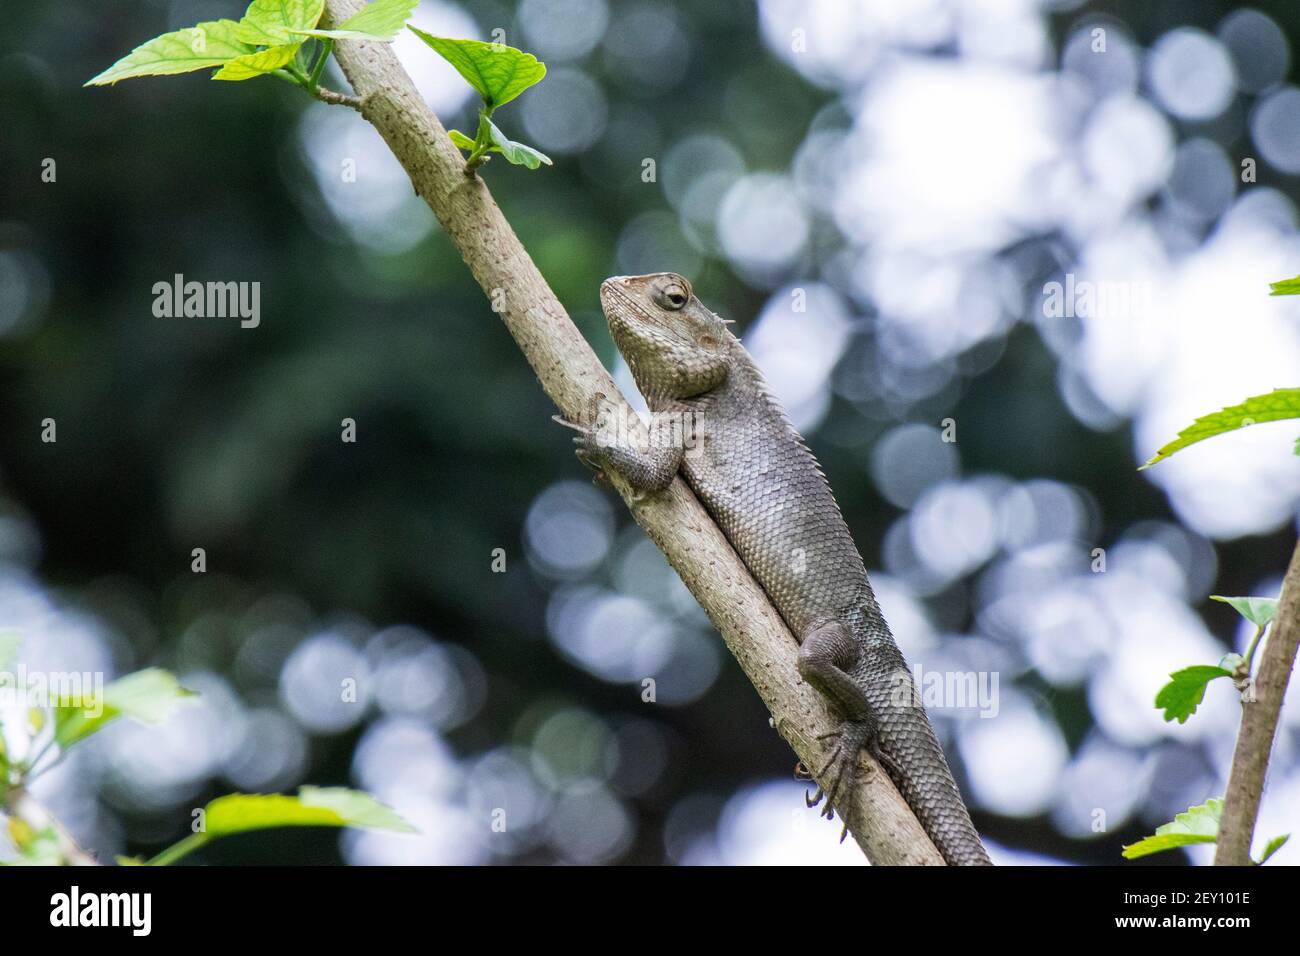 Brown lizard,tree lizard, details of lizard skin stick on the tree with bokeh background Stock Photo